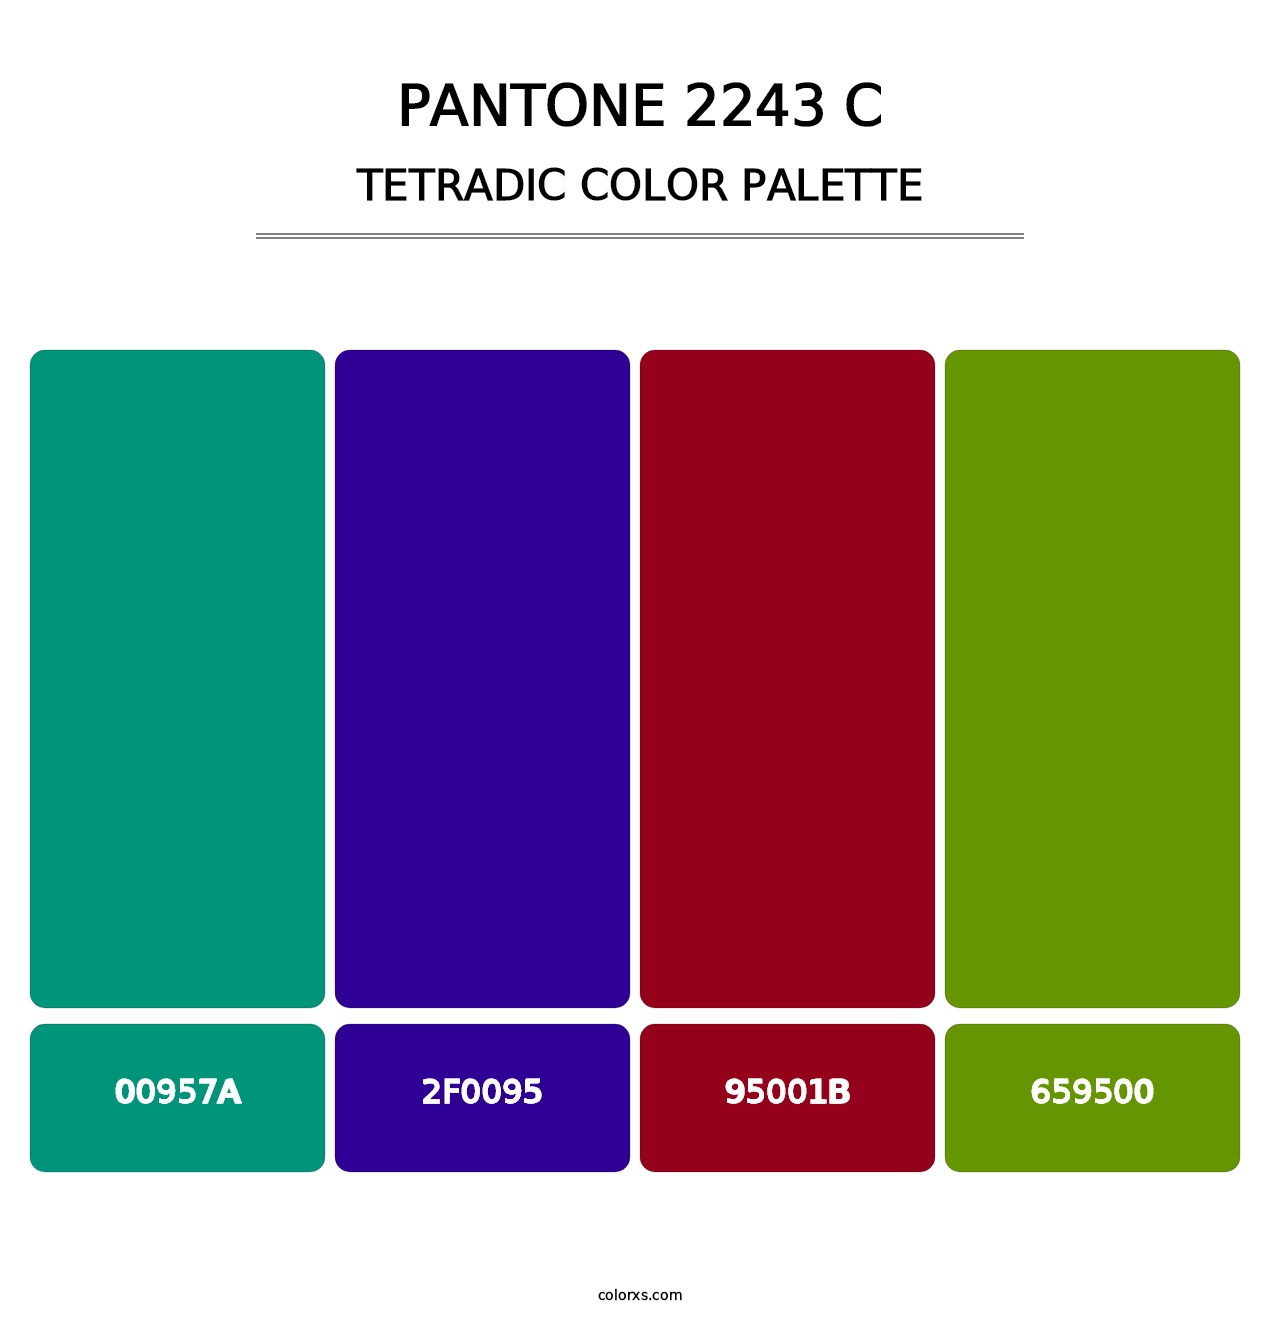 PANTONE 2243 C - Tetradic Color Palette